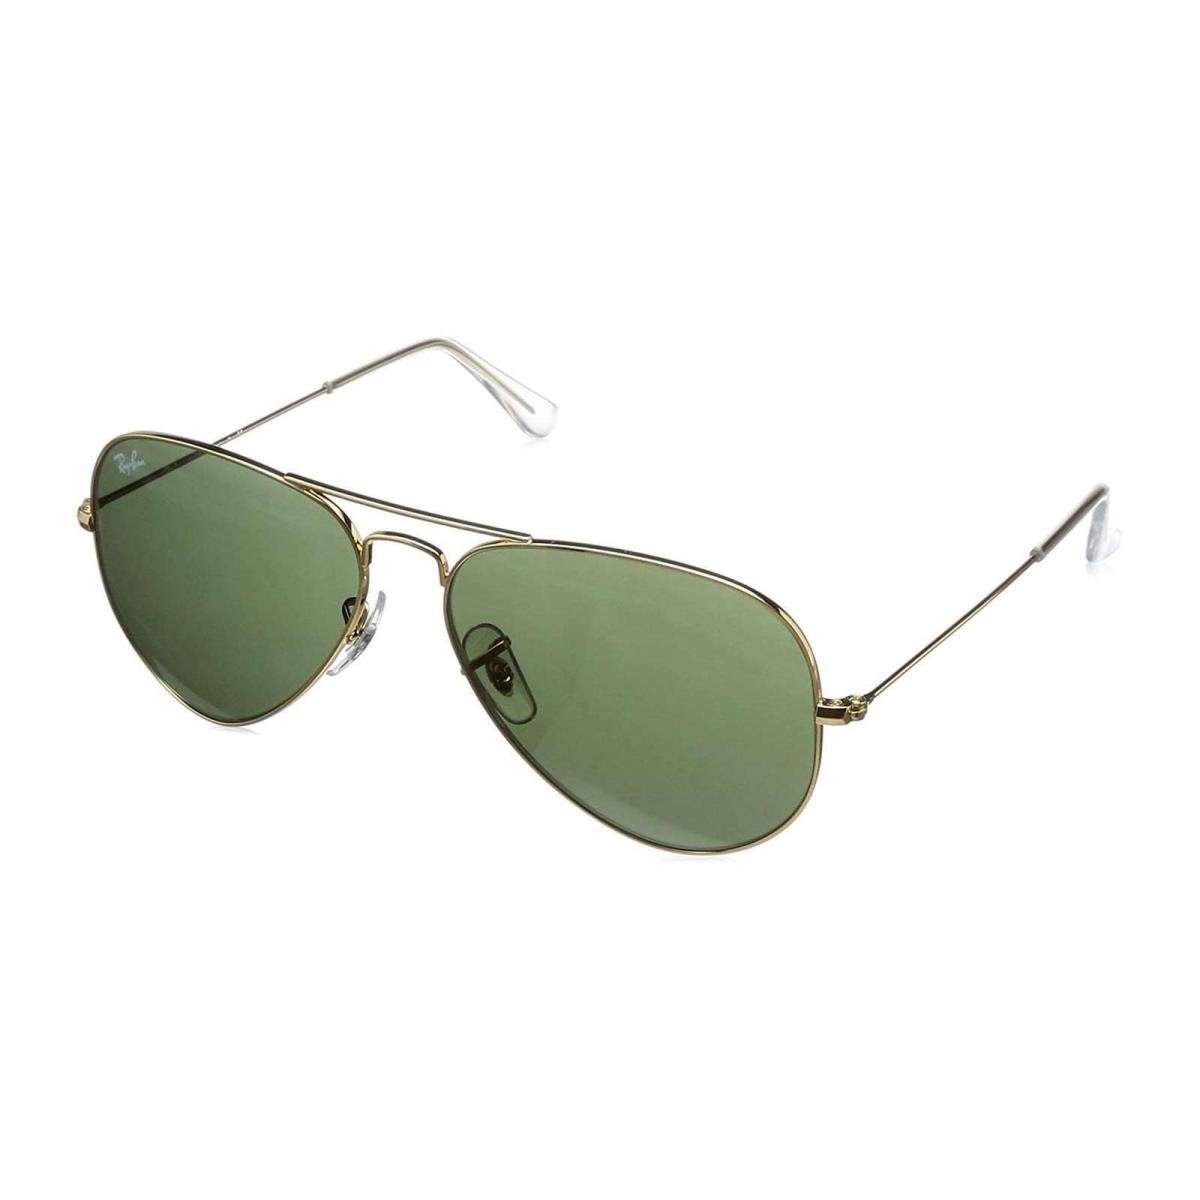 Ray-ban Men s Accessories Aviator Classic Metal Frame Sunglasses